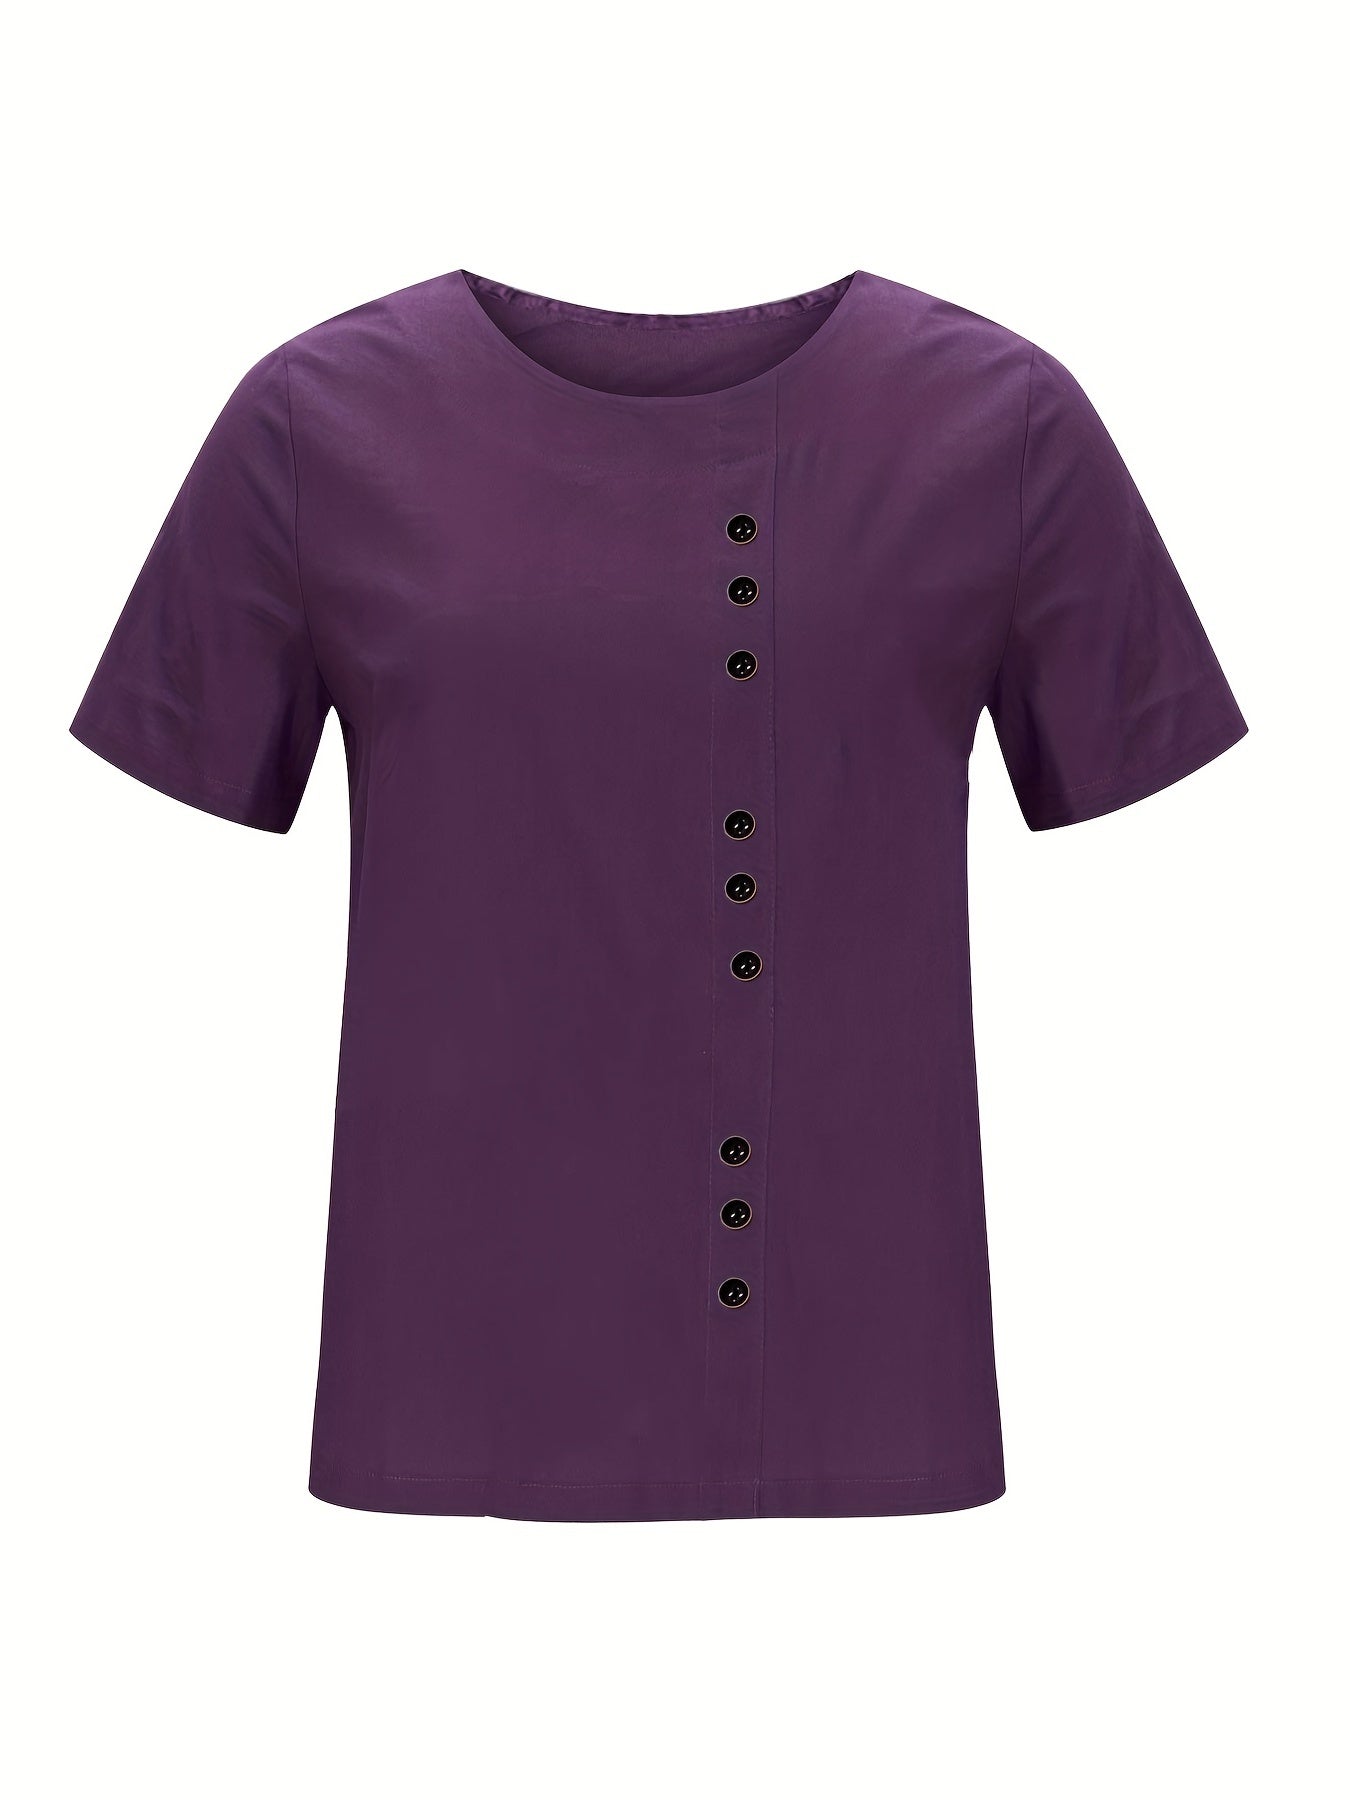 「binfenxie」Buttons Solid T-shirt, Casual Crew Neck Short Sleeve Summer T-shirt, Women's Clothing